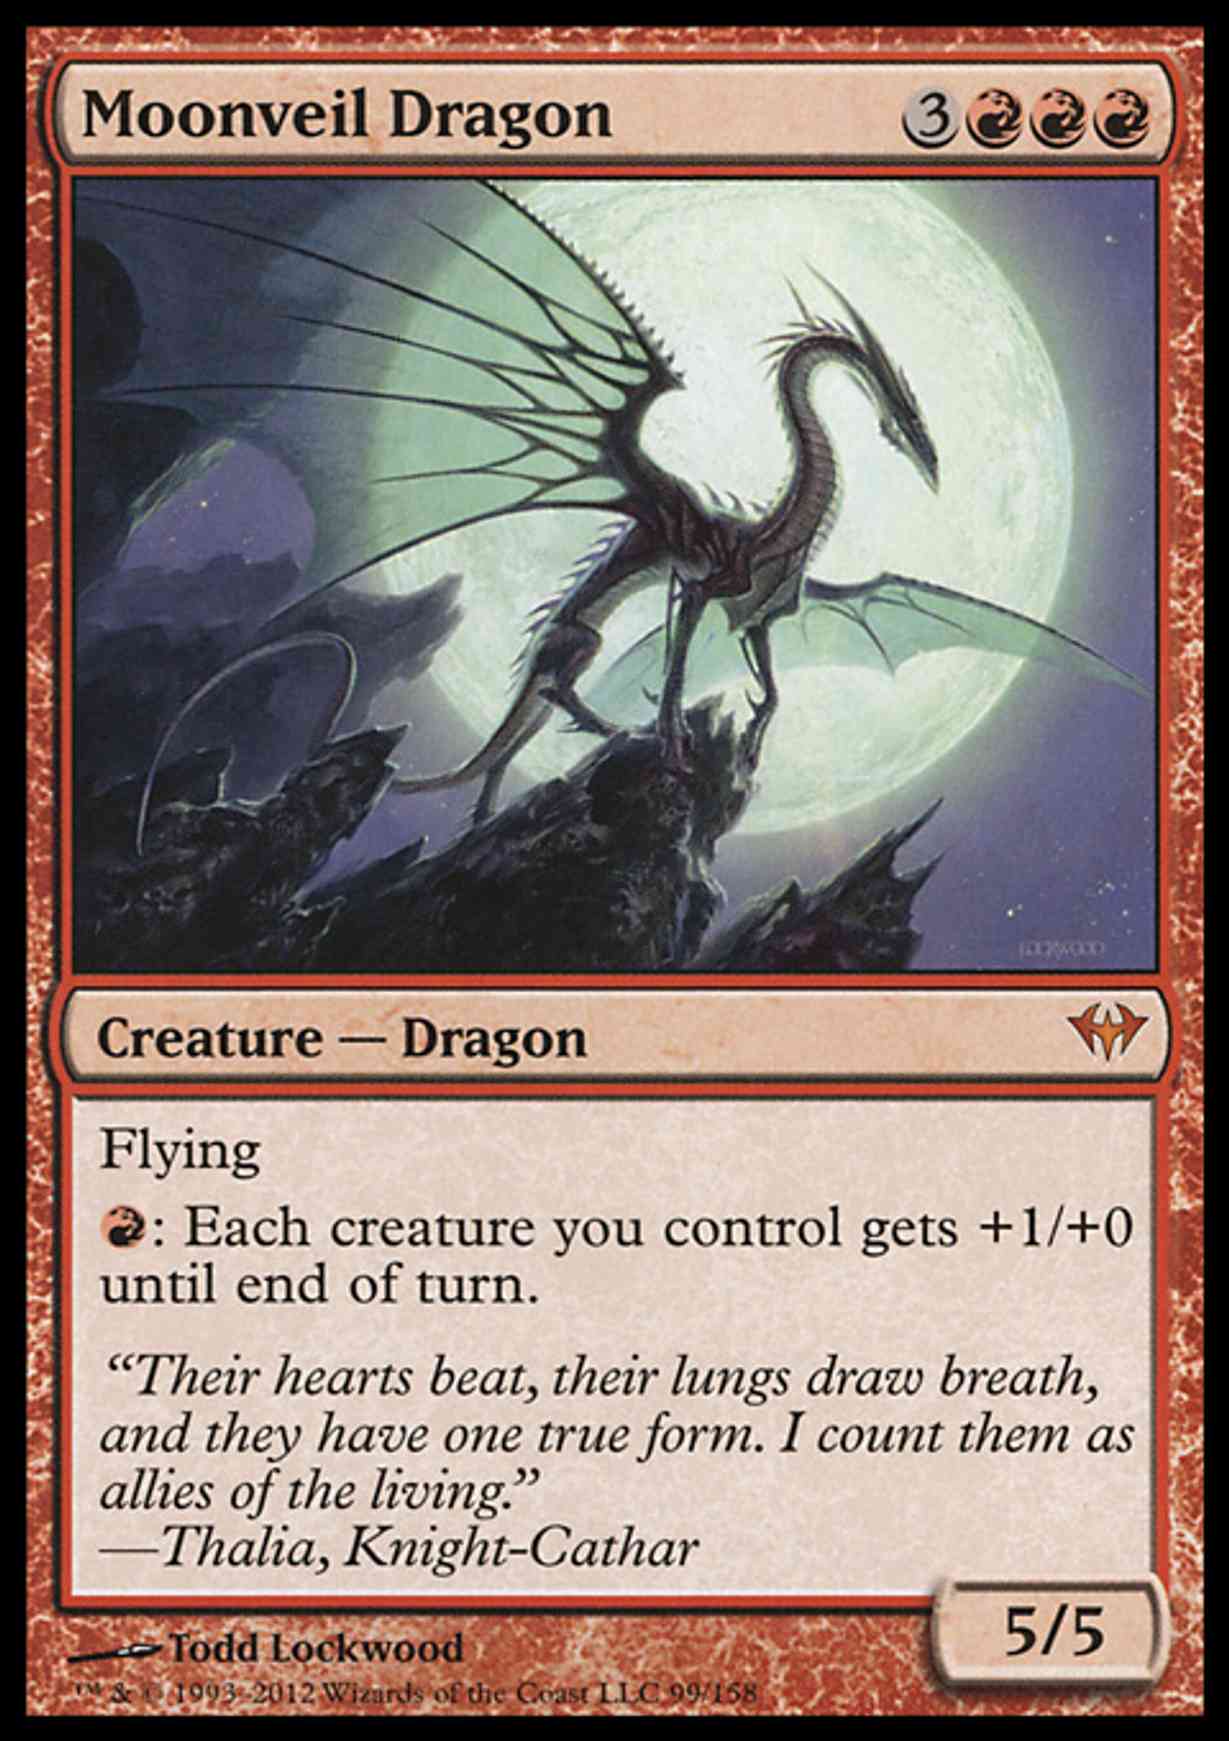 Moonveil Dragon magic card front